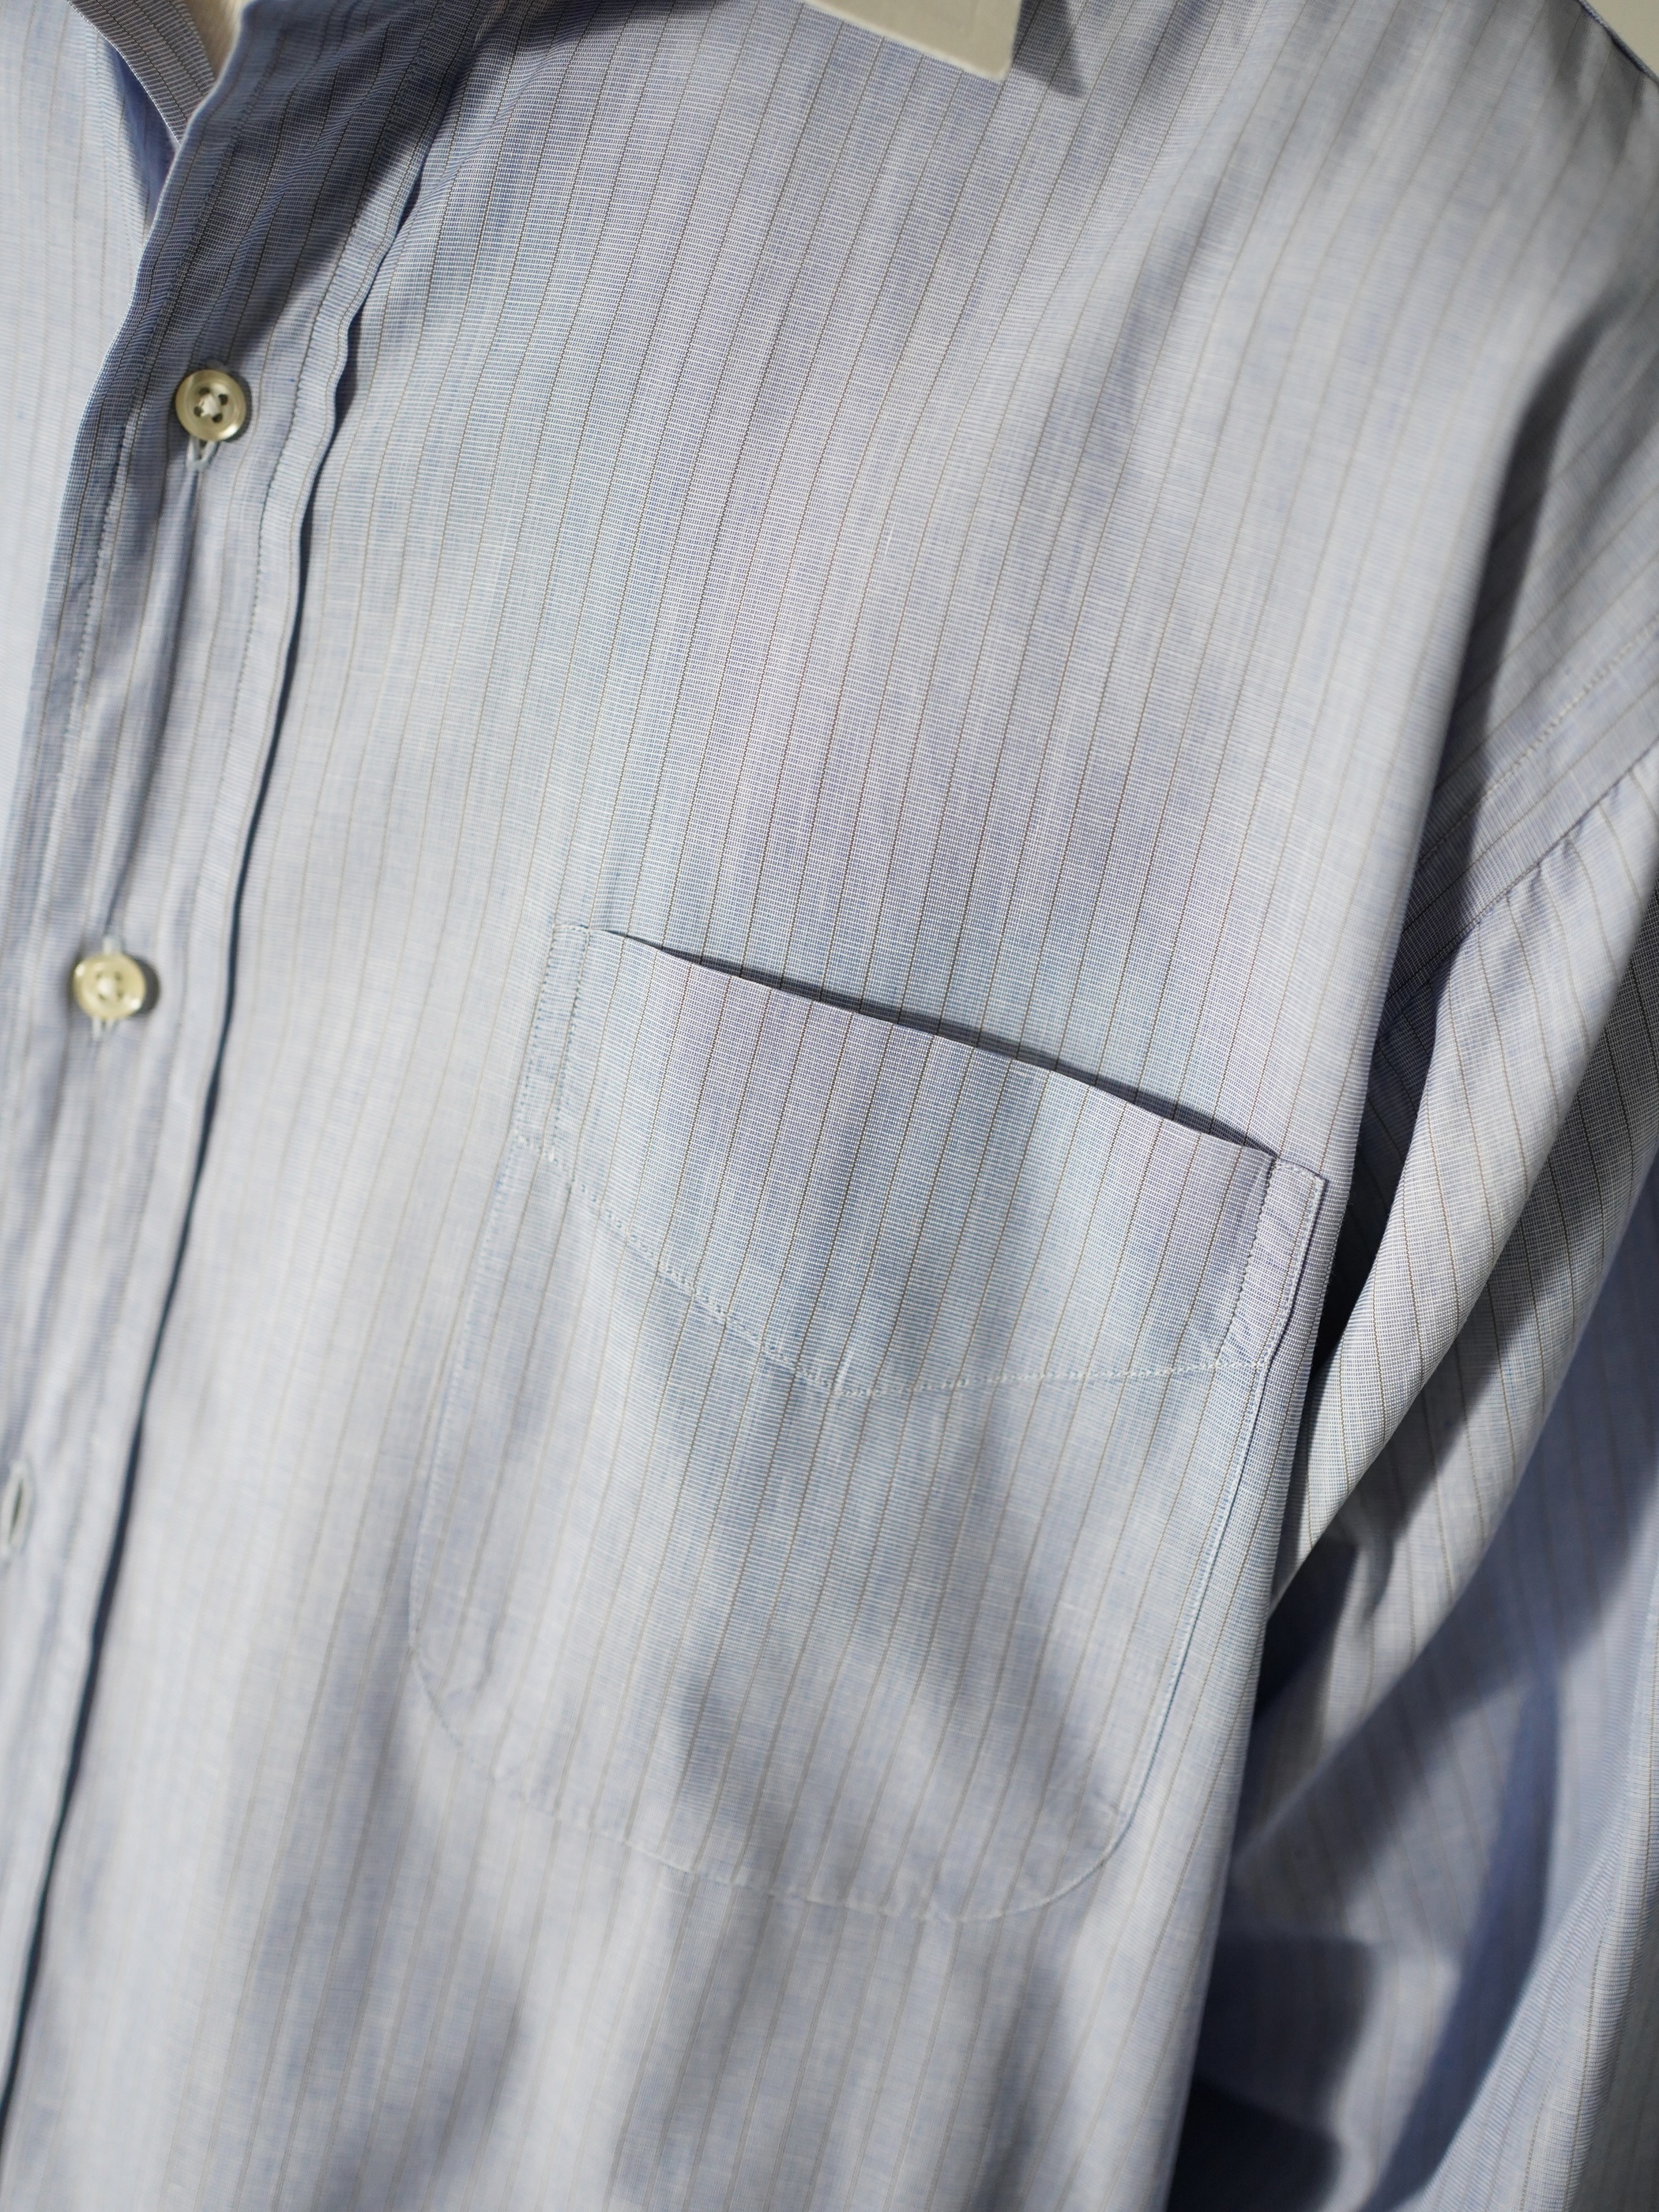 GITMAN BROS cleric collar stripe Dress shirts / Made in USA